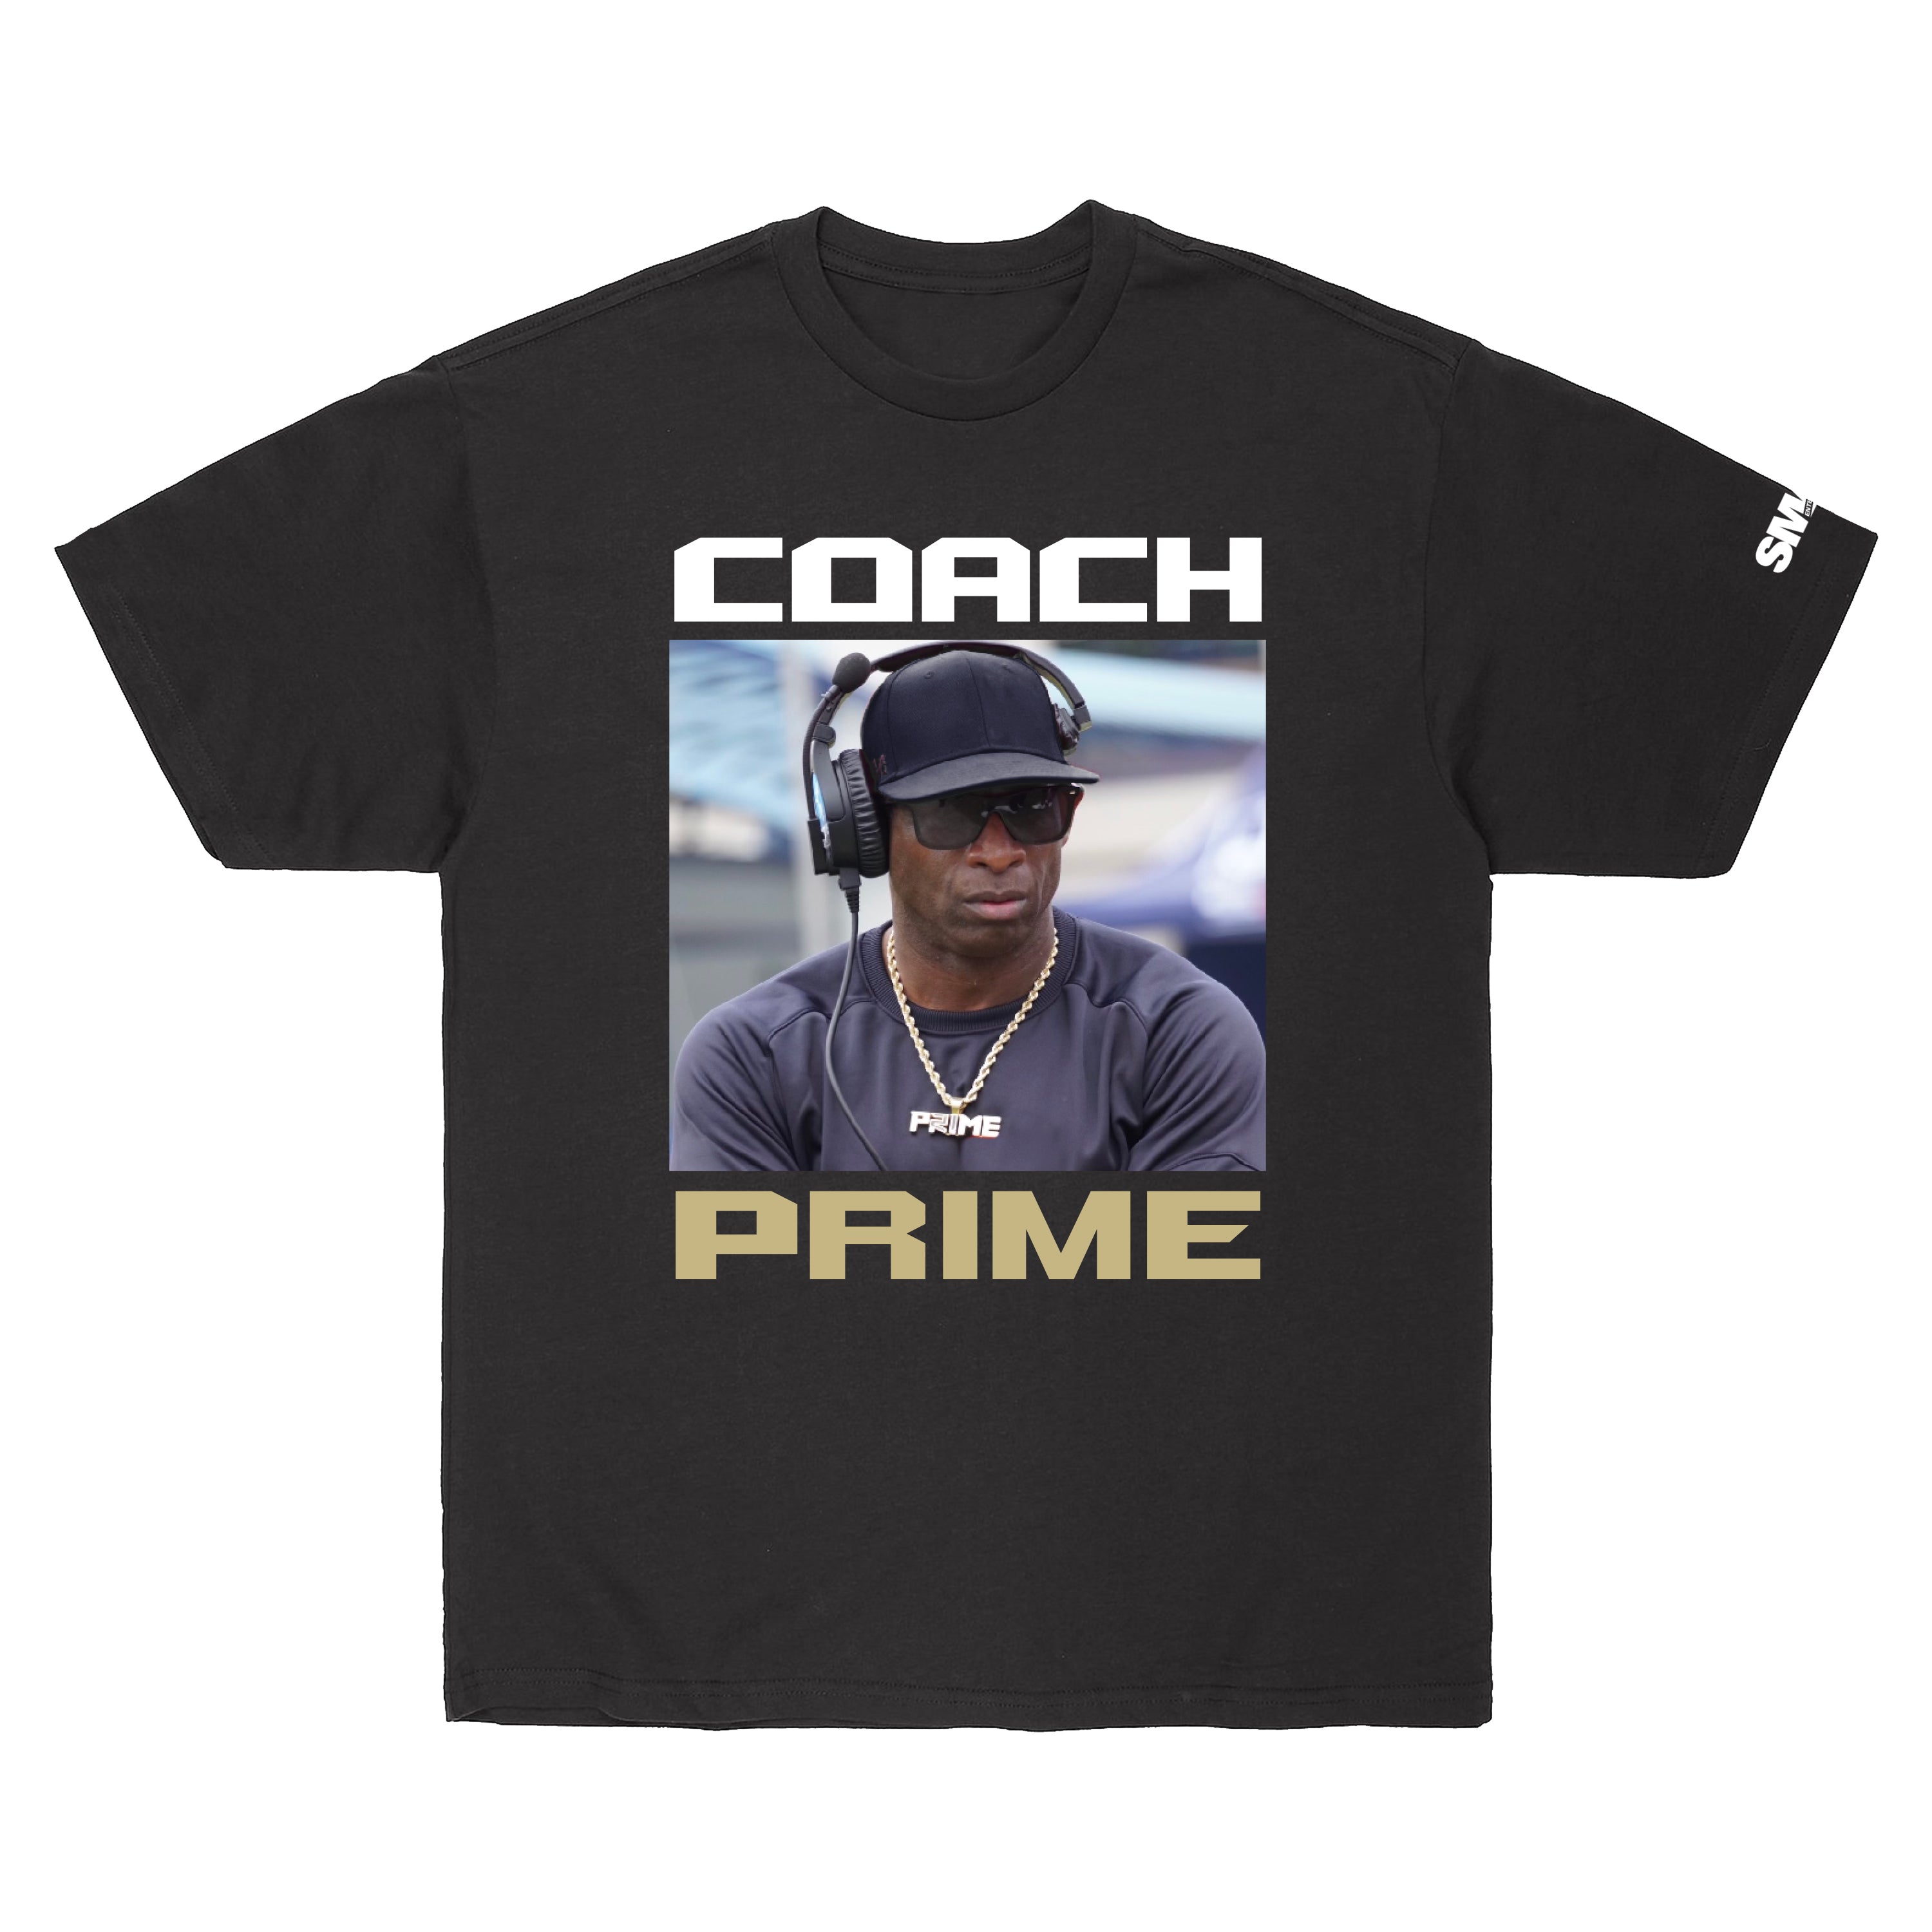 Coach Prime Tee